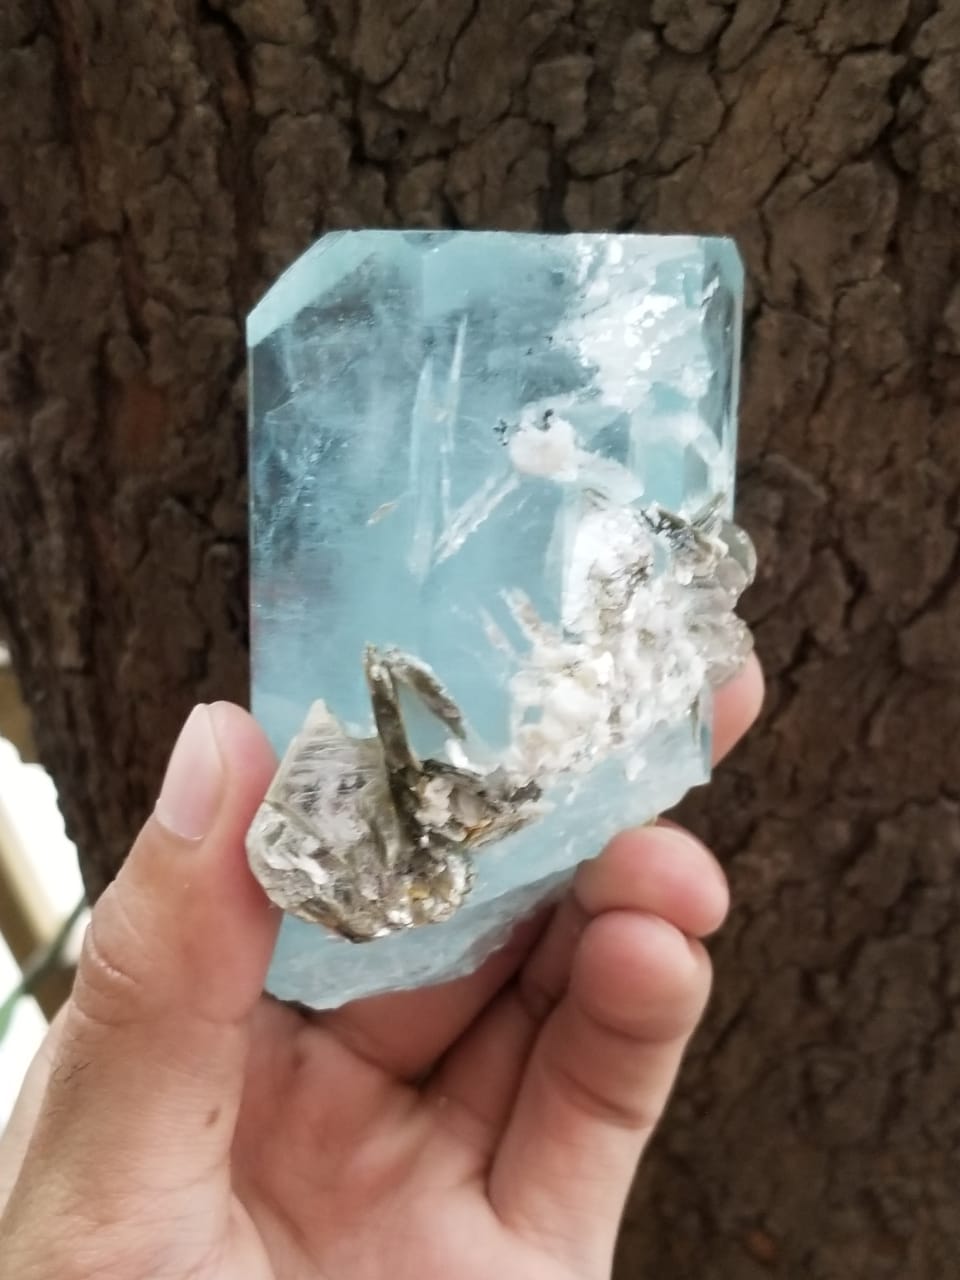 Beautiful Aquamarine crystal for sale